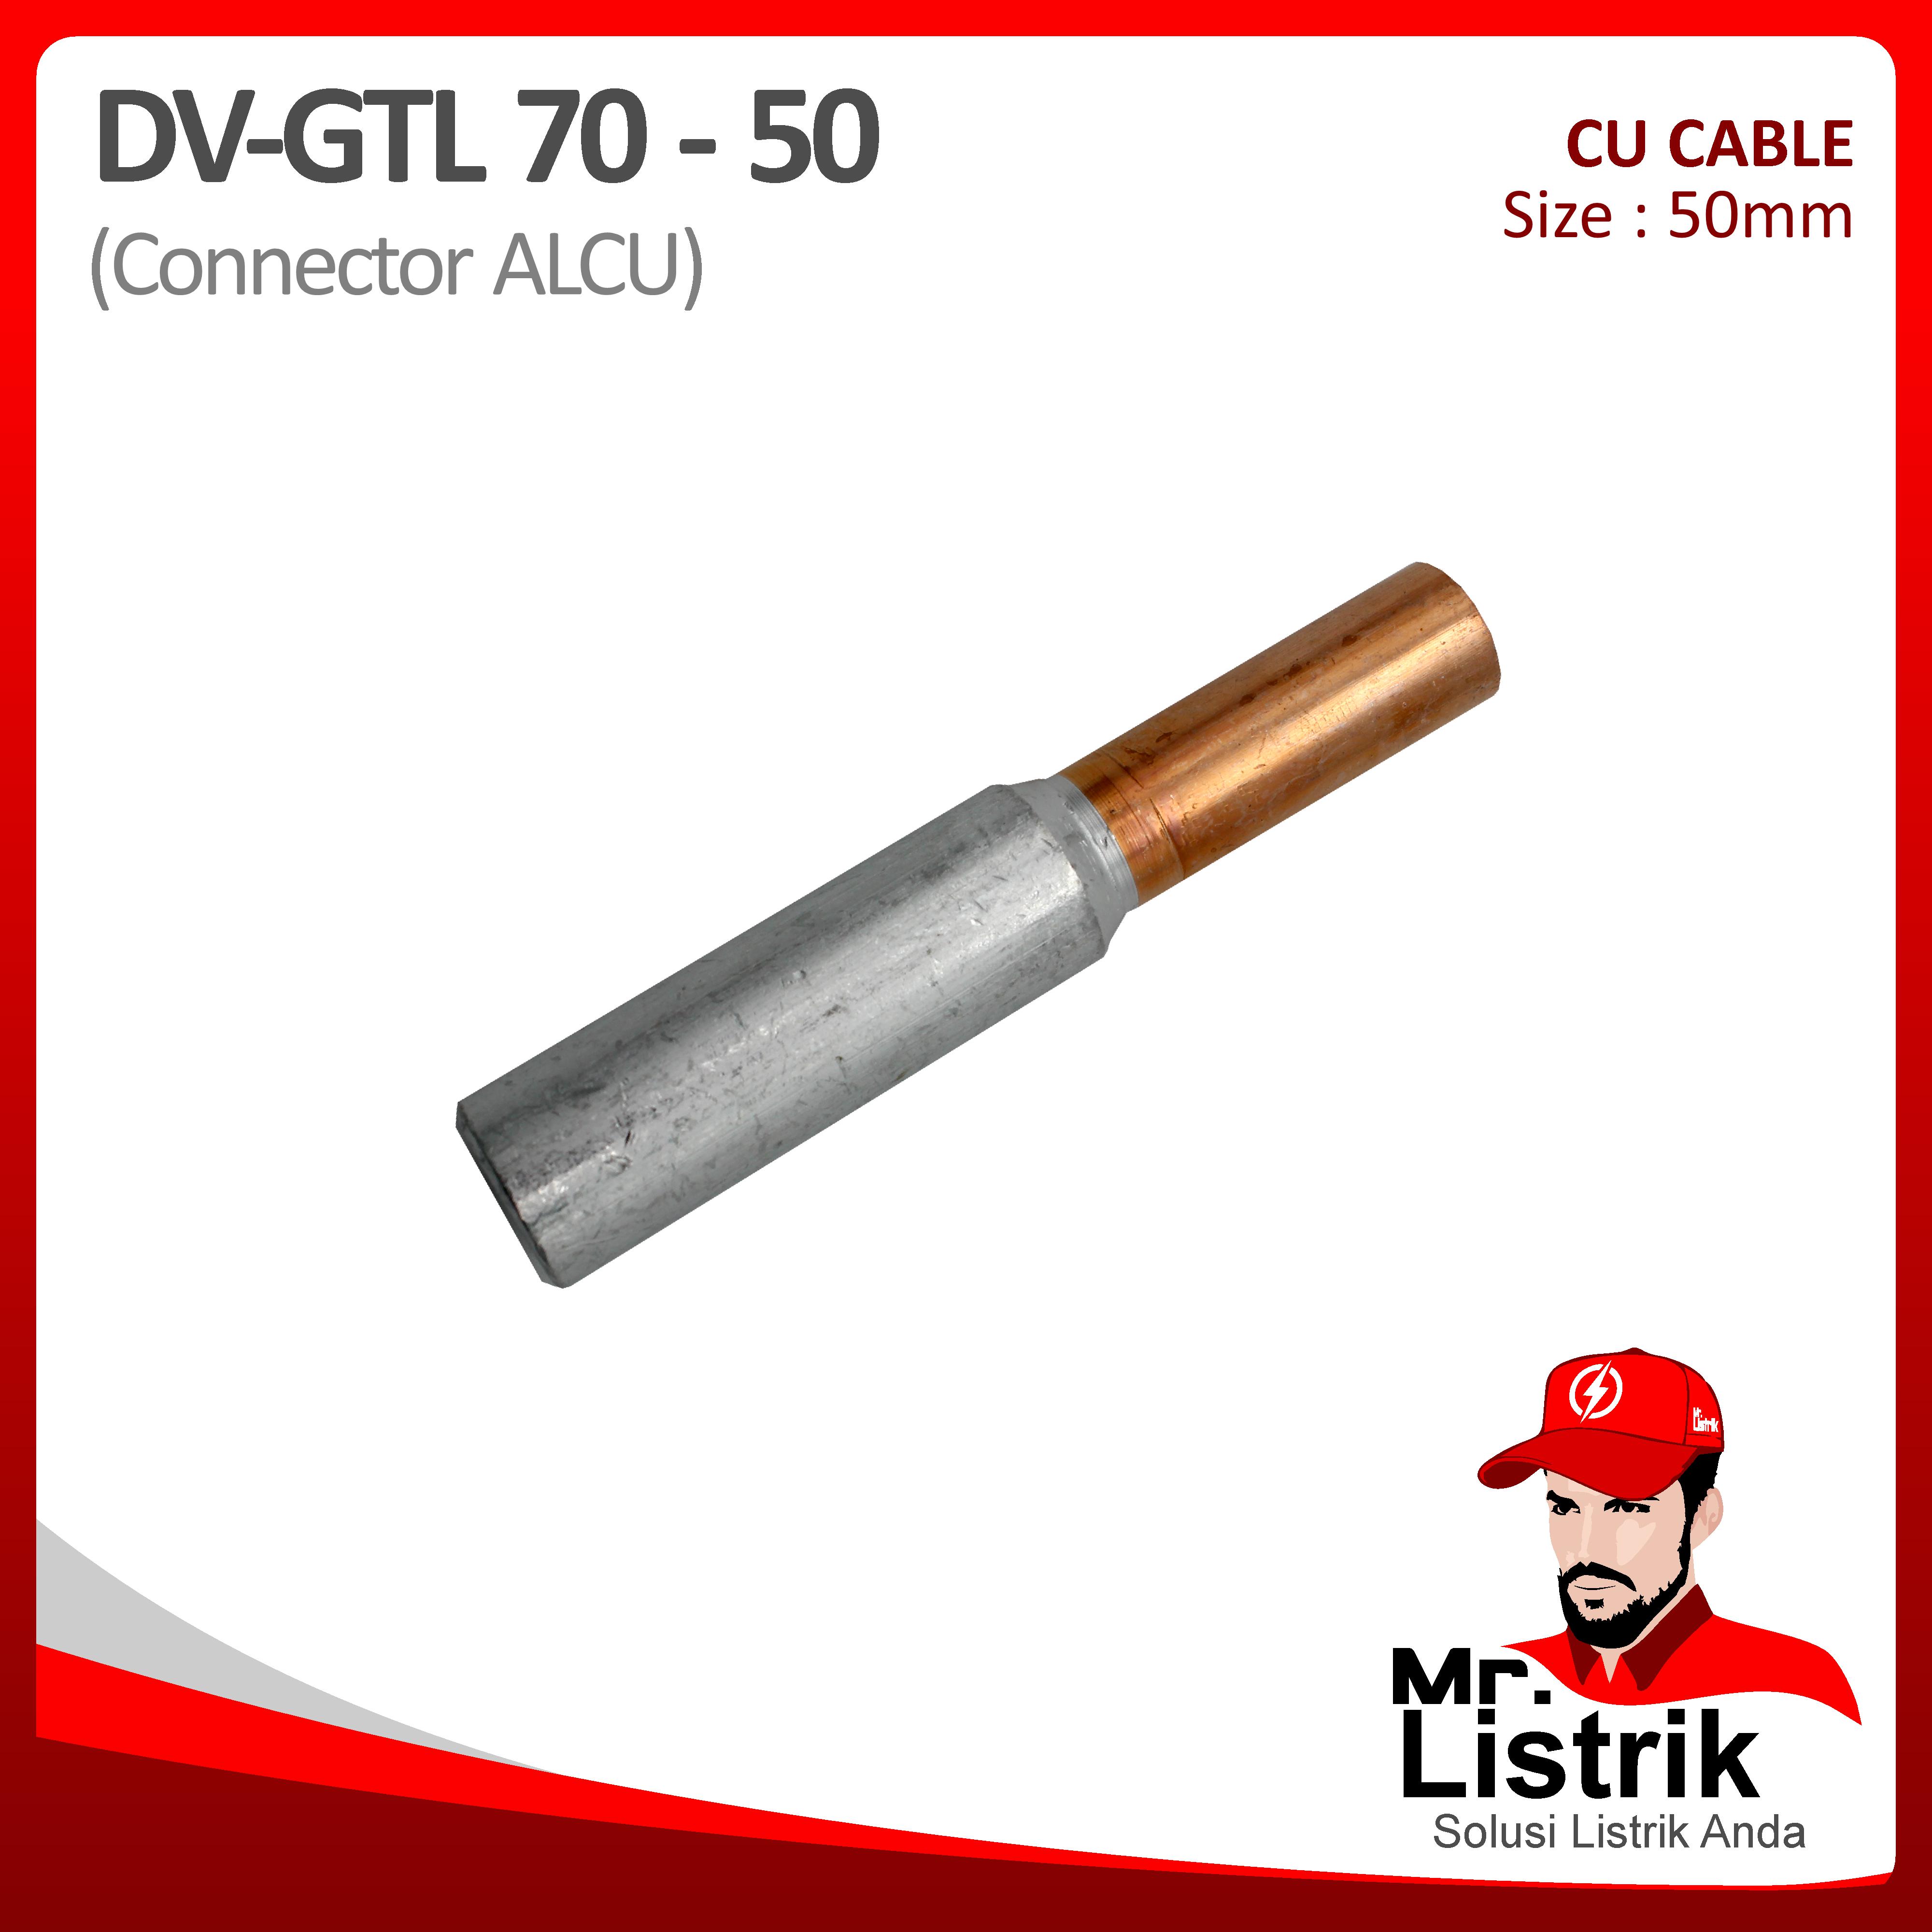 Connector ALCU 70mm DV GTL-70-50